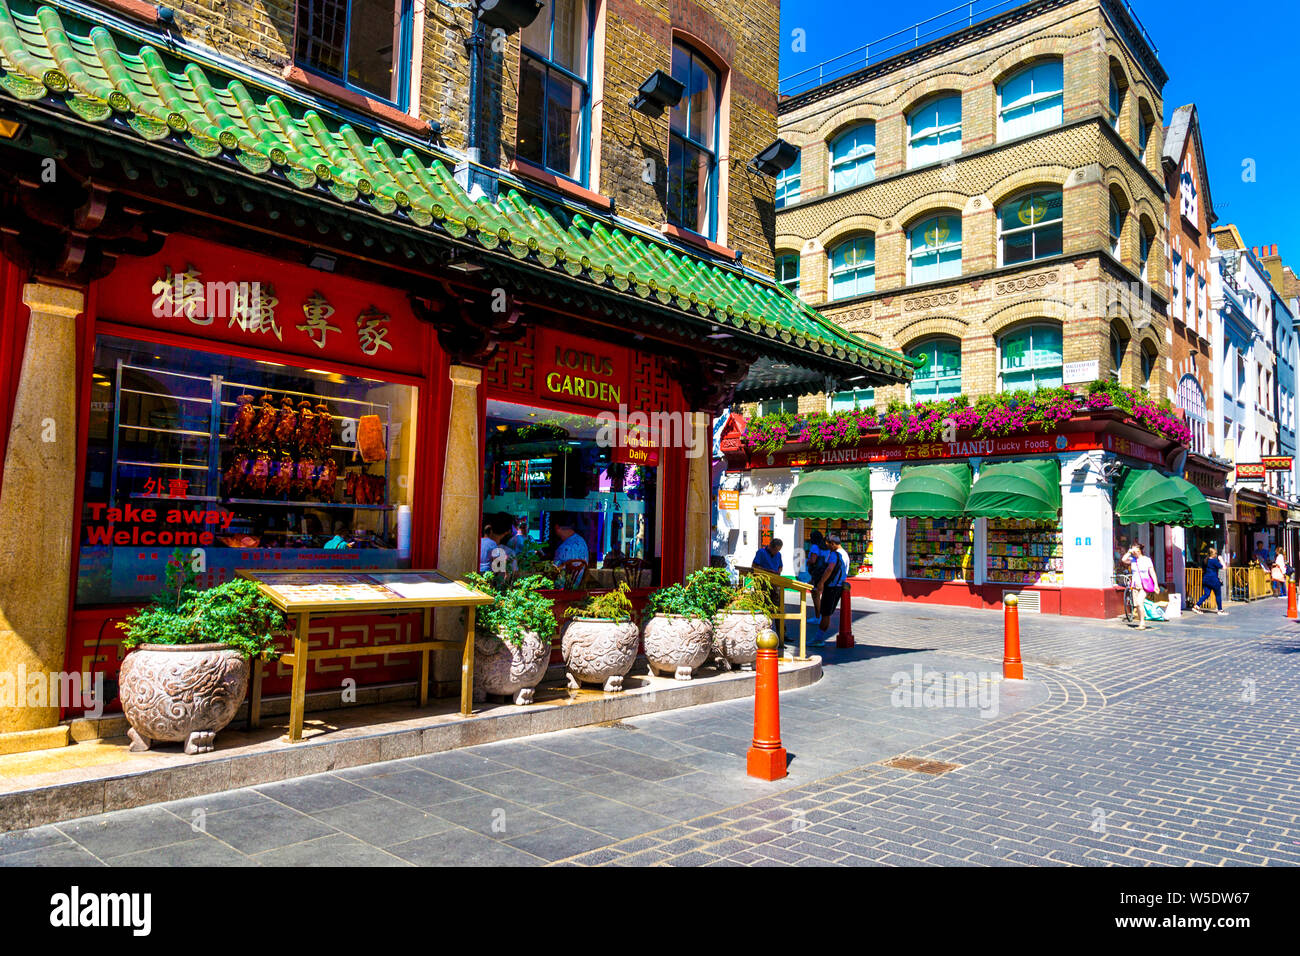 Facade of Chinese restaurant Lotus Garden in Chinatown, London, UK Stock Photo